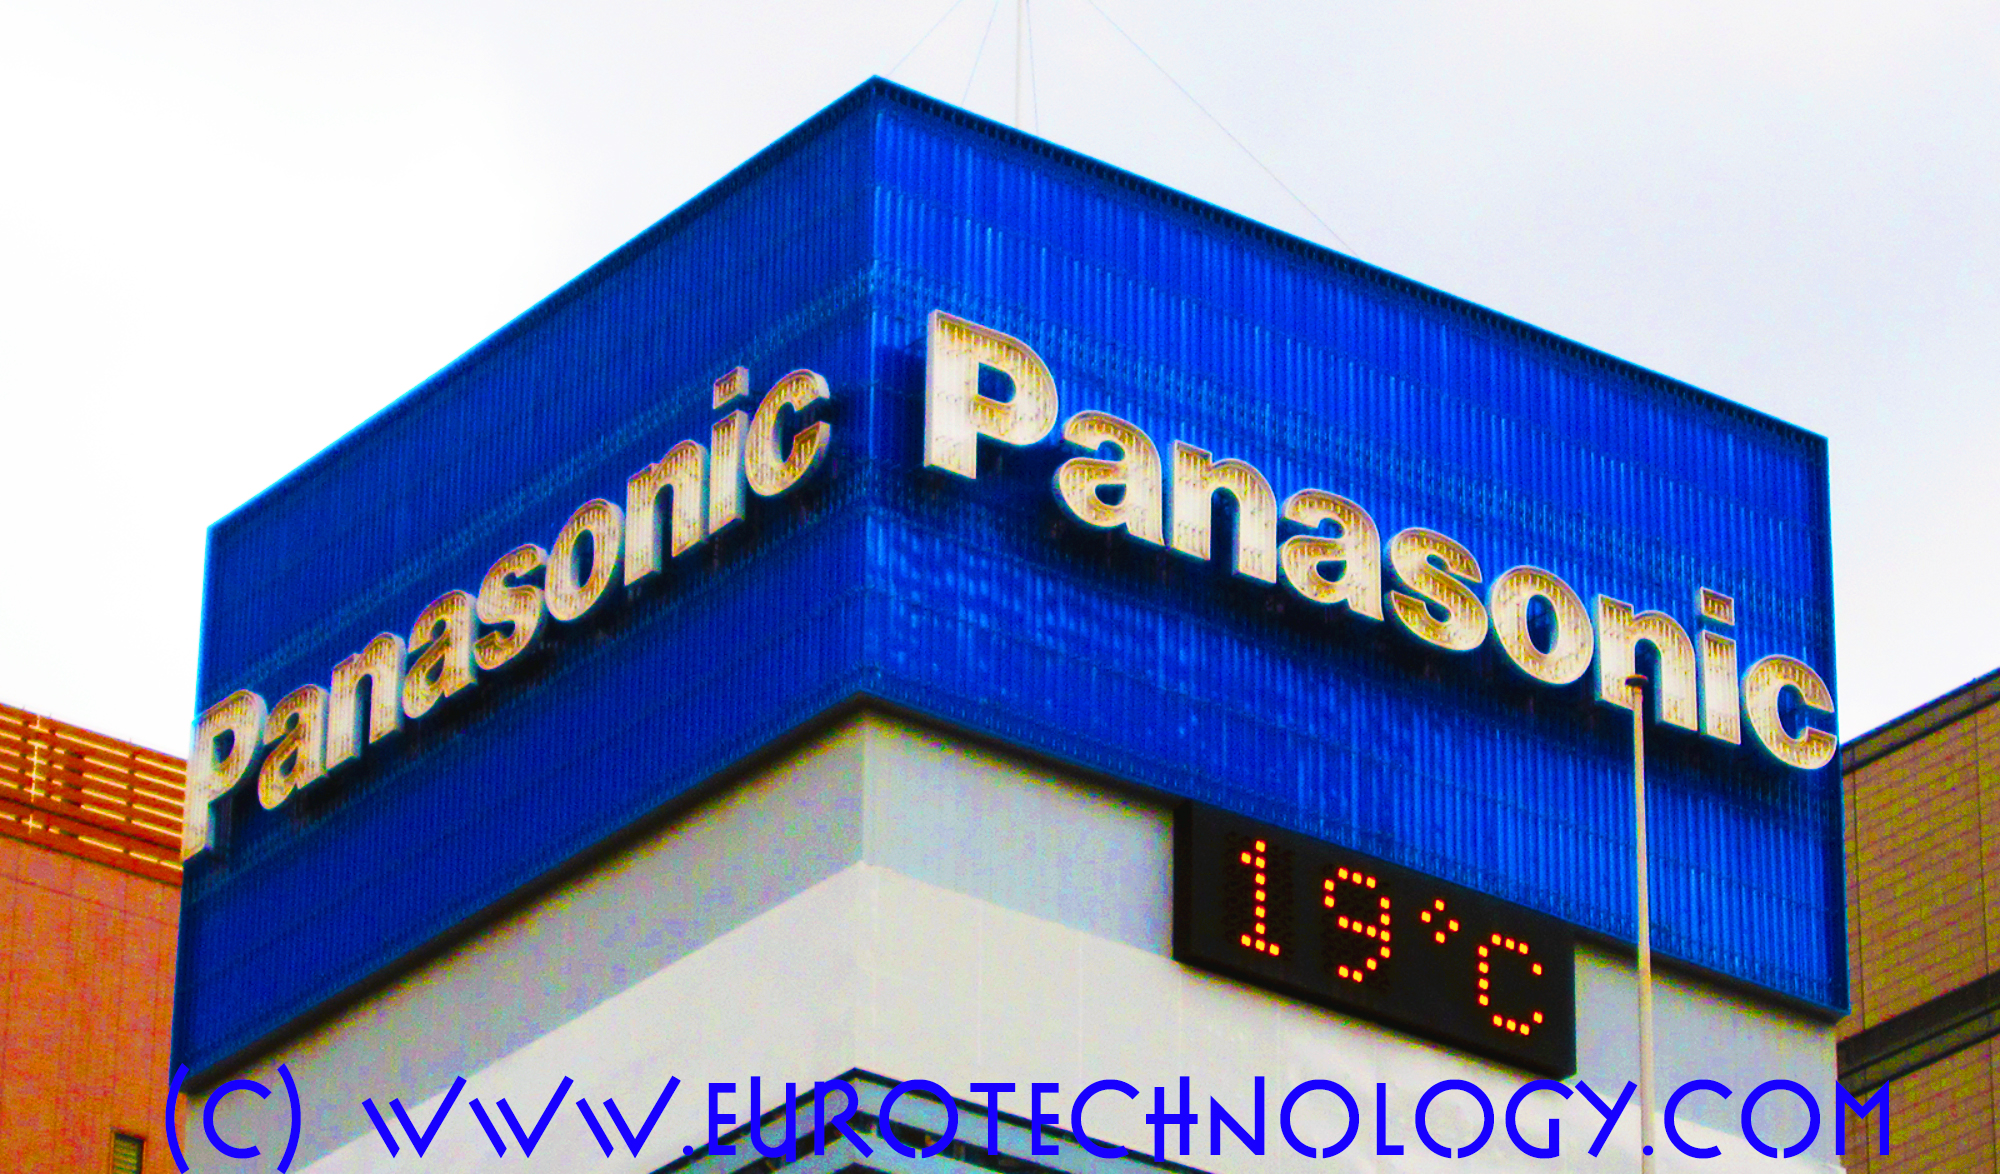 Panasonic Warns on Loss (CNBC TV interview)